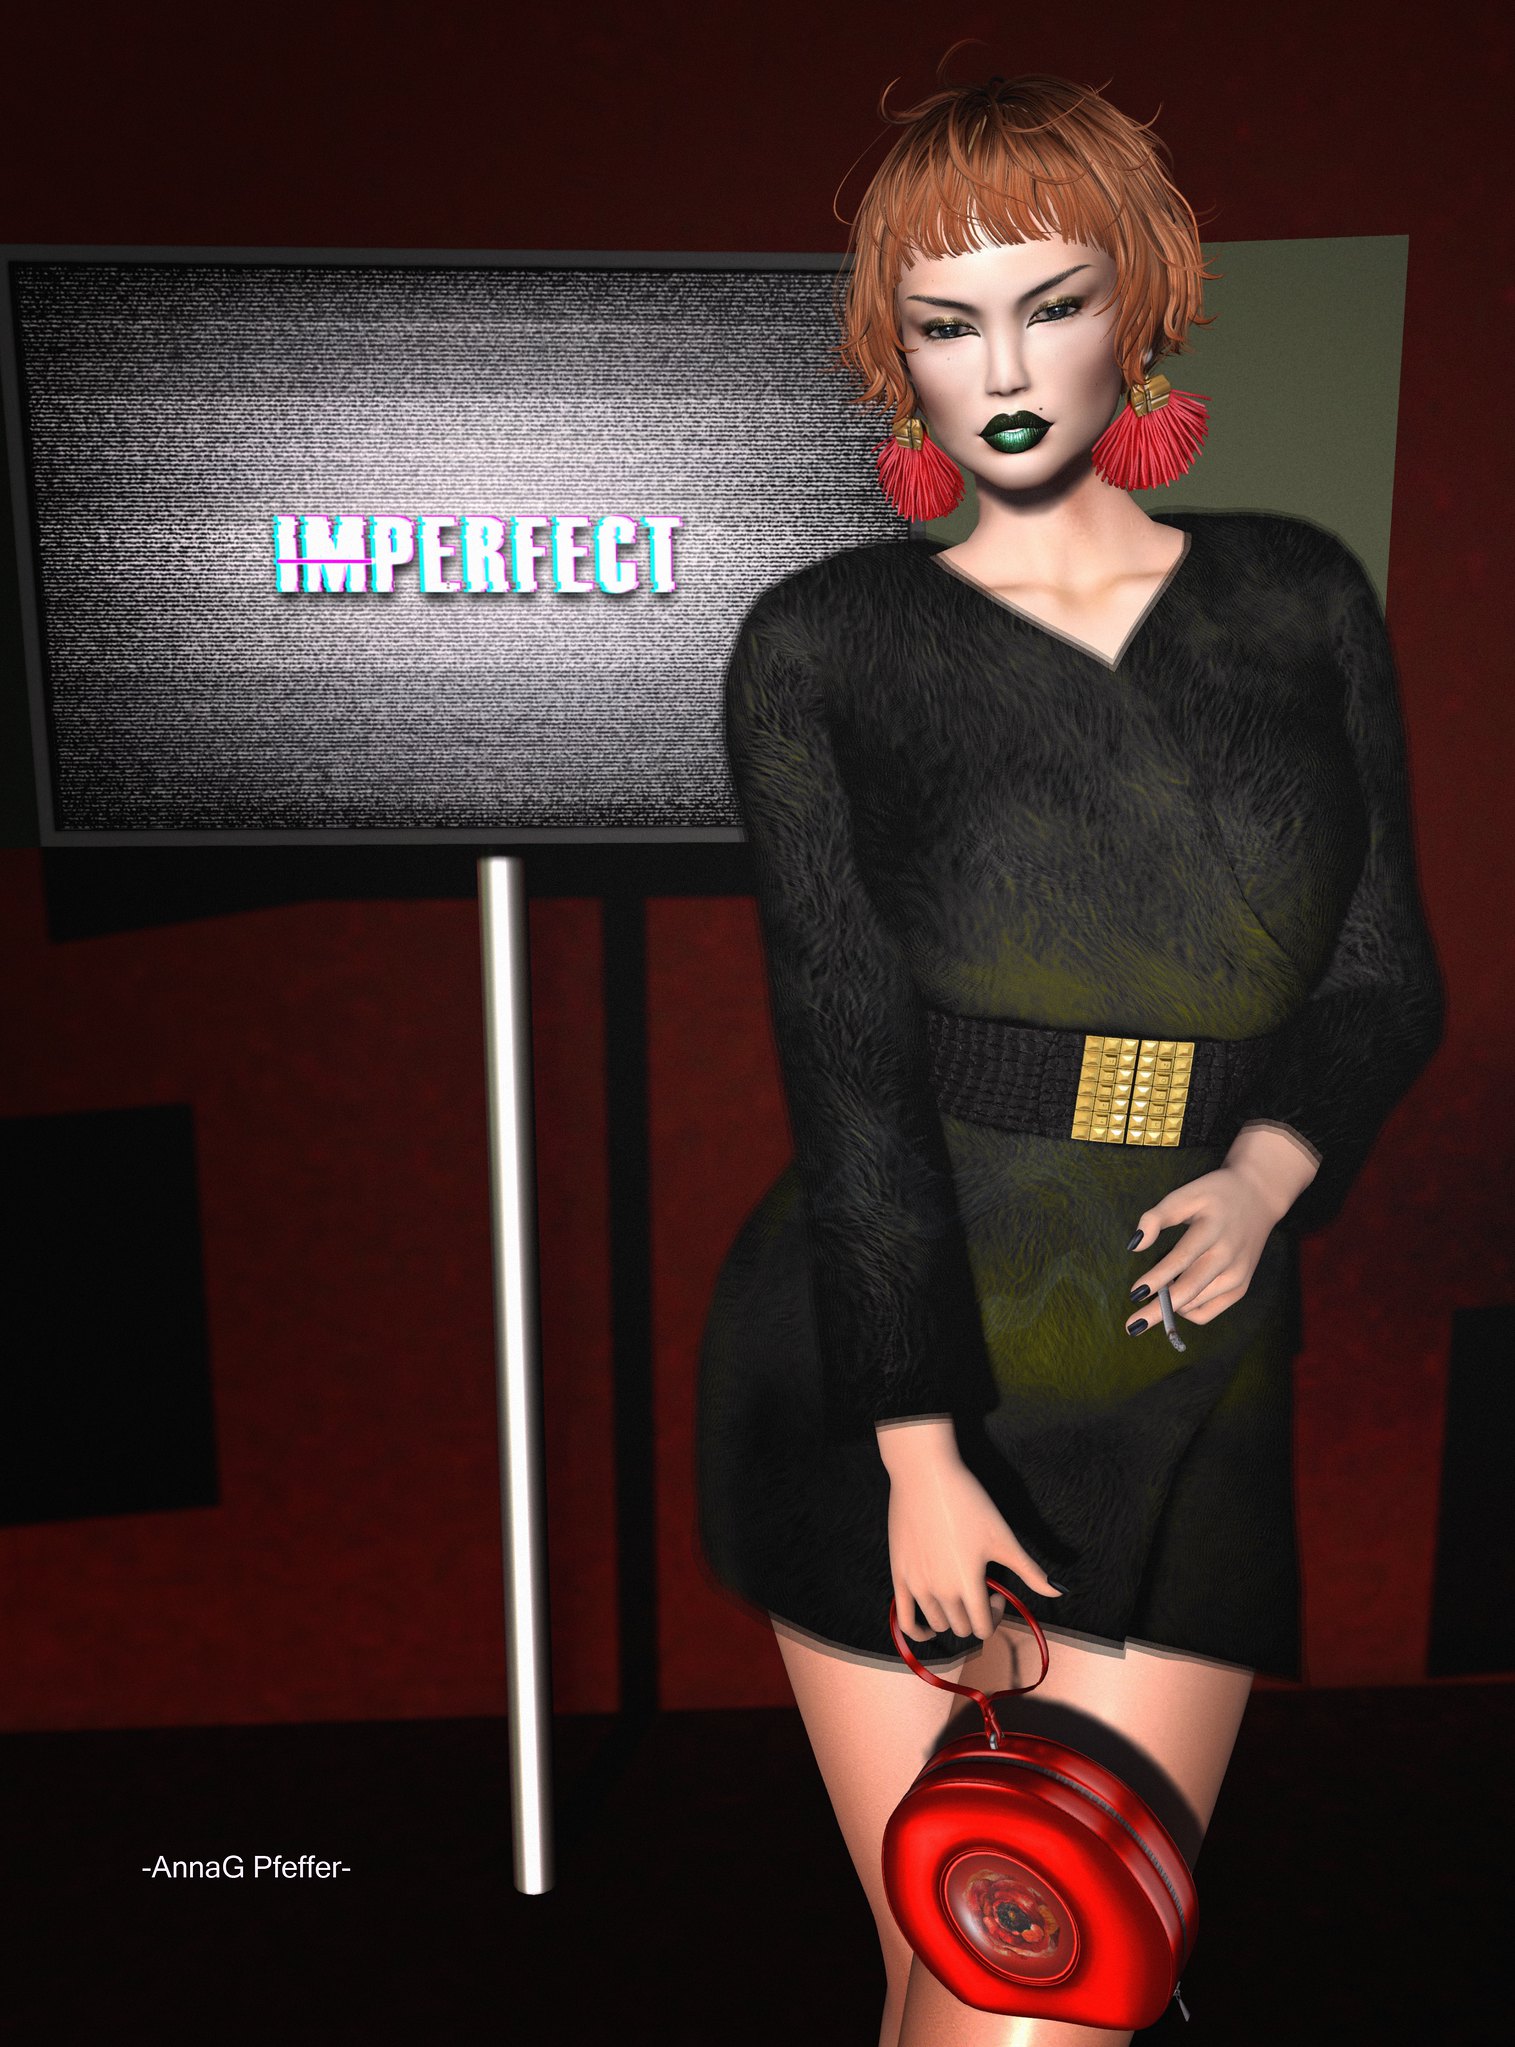 124.18 I'm Imperfect